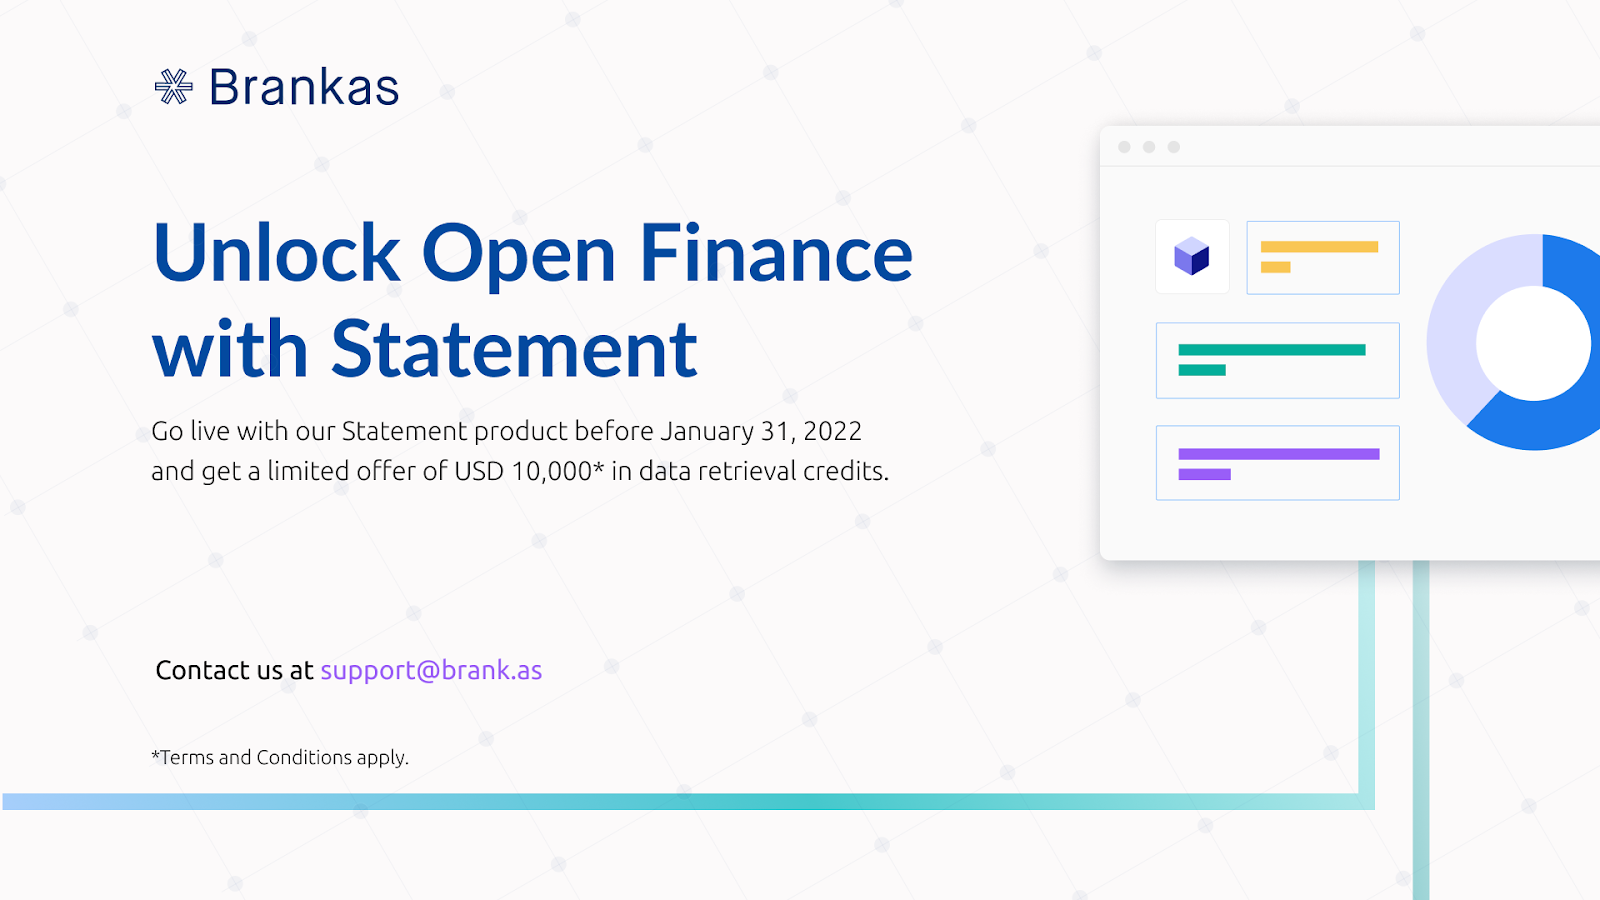 Unlock open finance with Statement